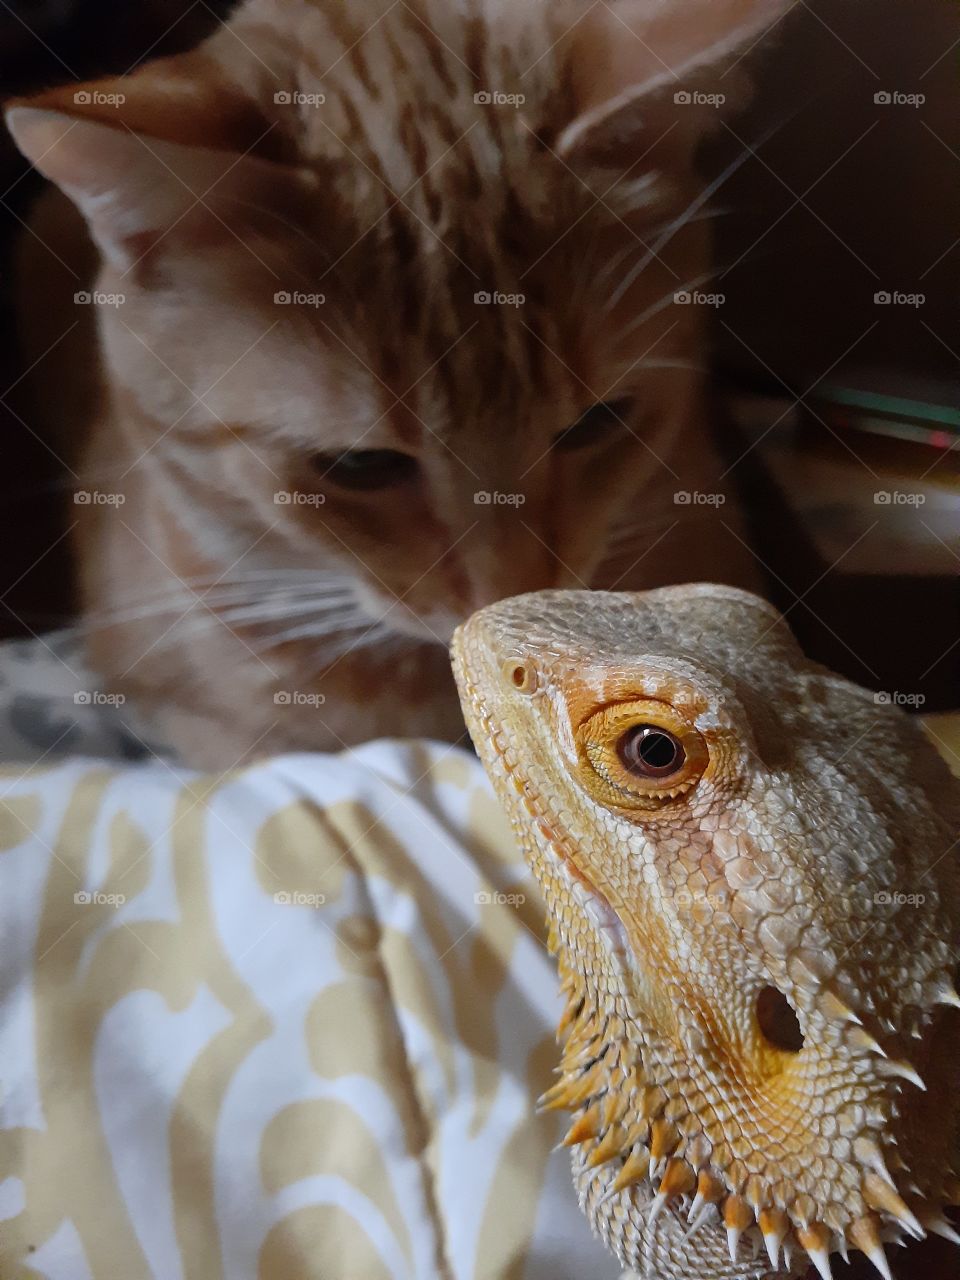 Bearded Dragon and Orange Tabby Cat